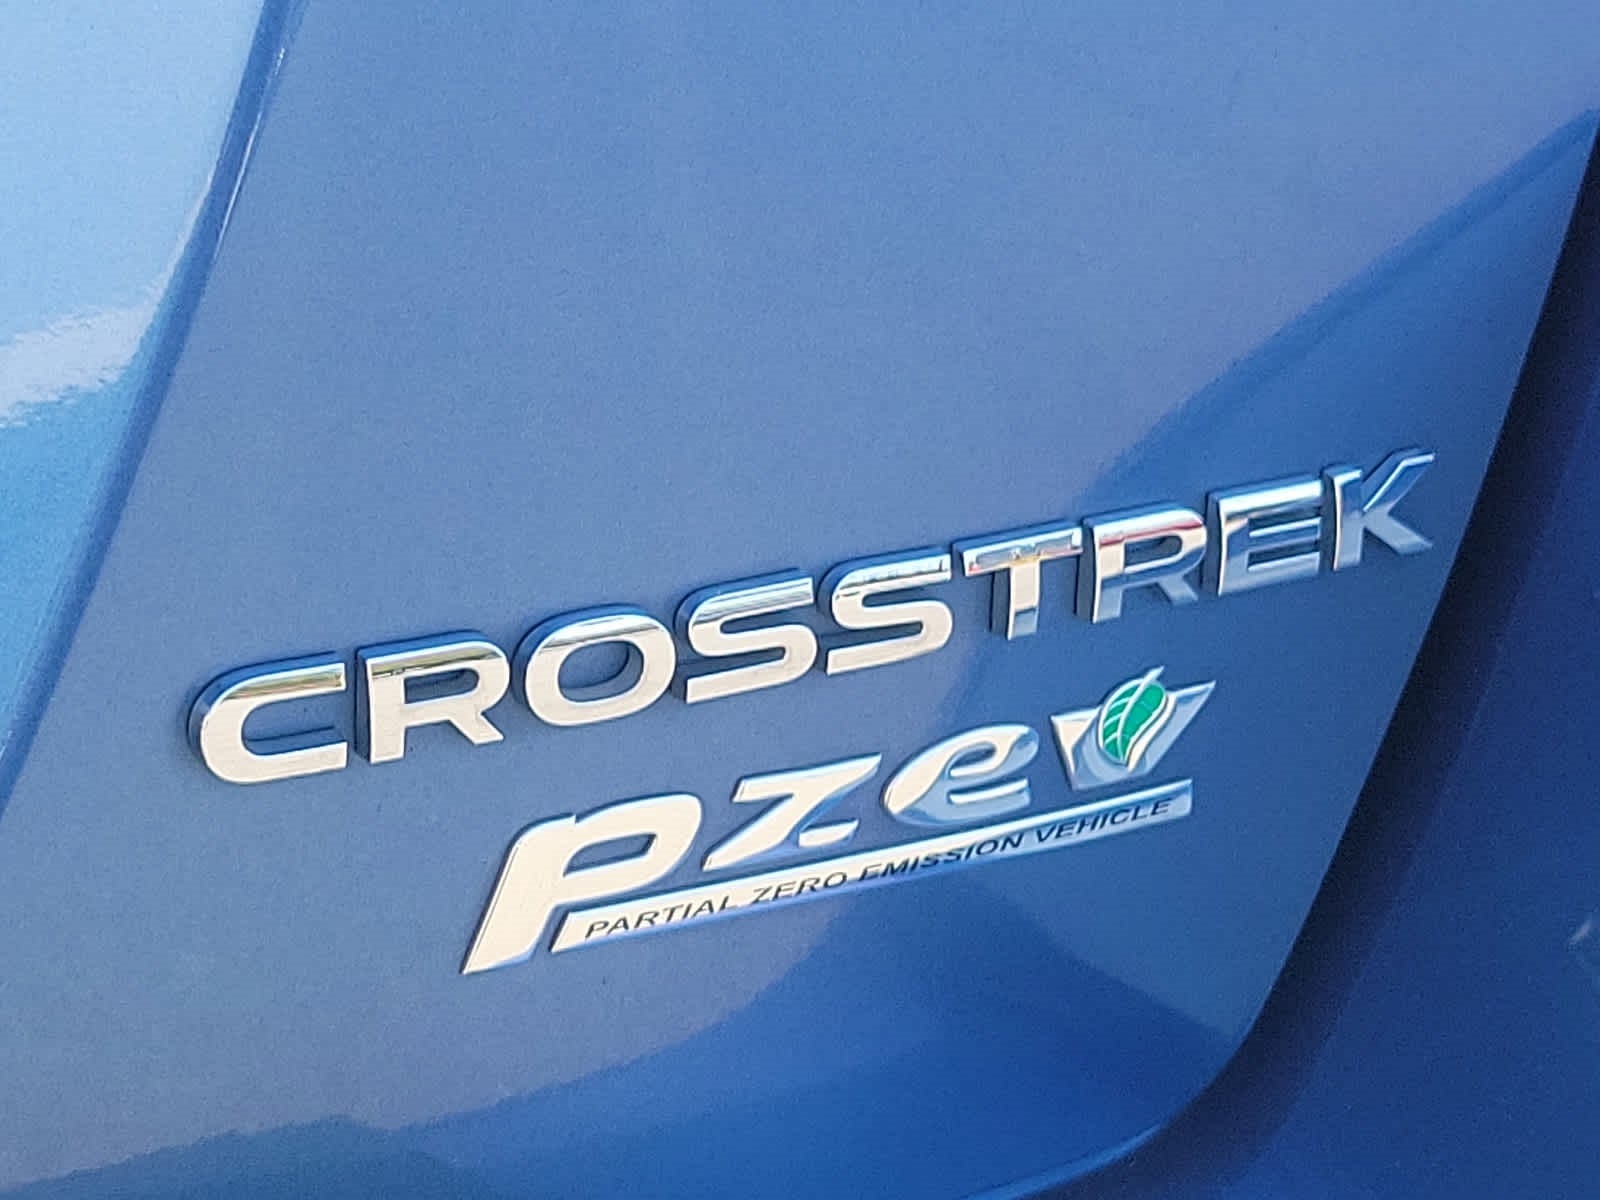 2017 Subaru Crosstrek Limited